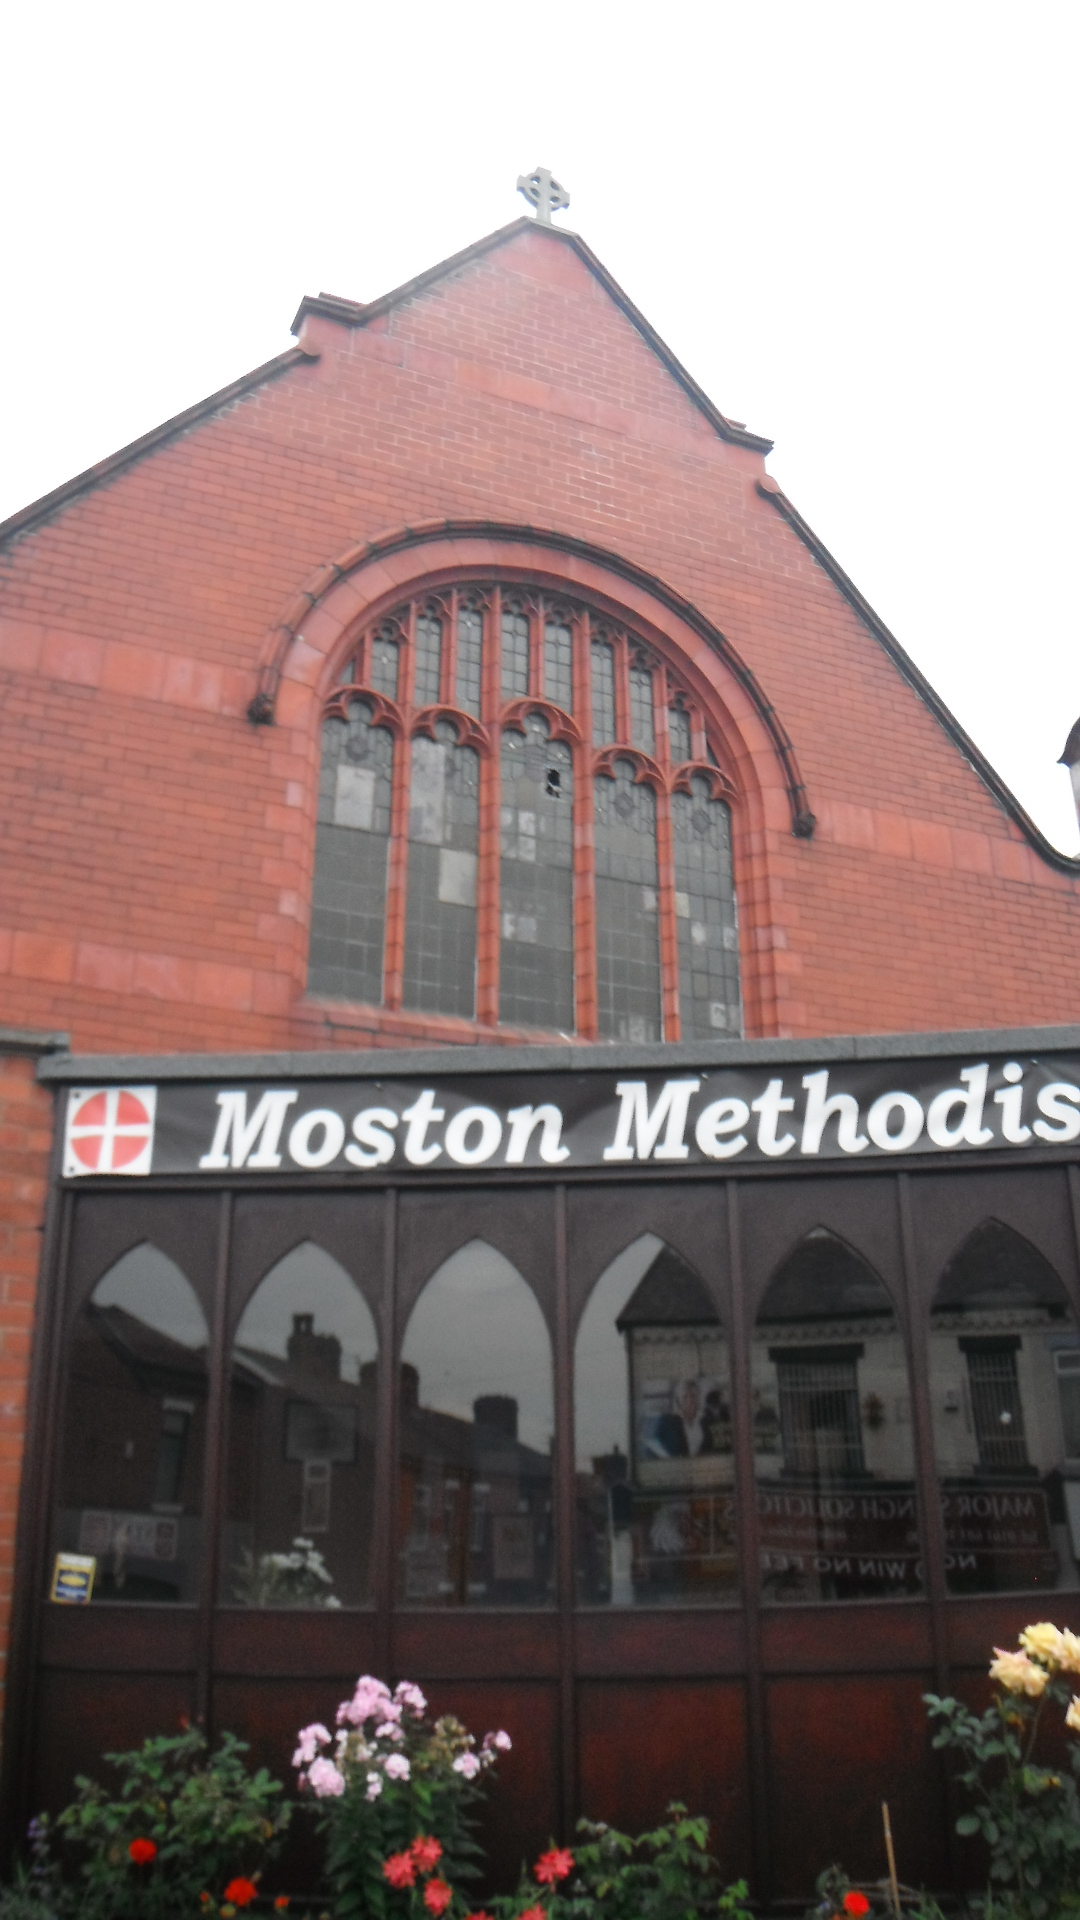 Photo taken by me - Moton Methodit Church - Manchester 